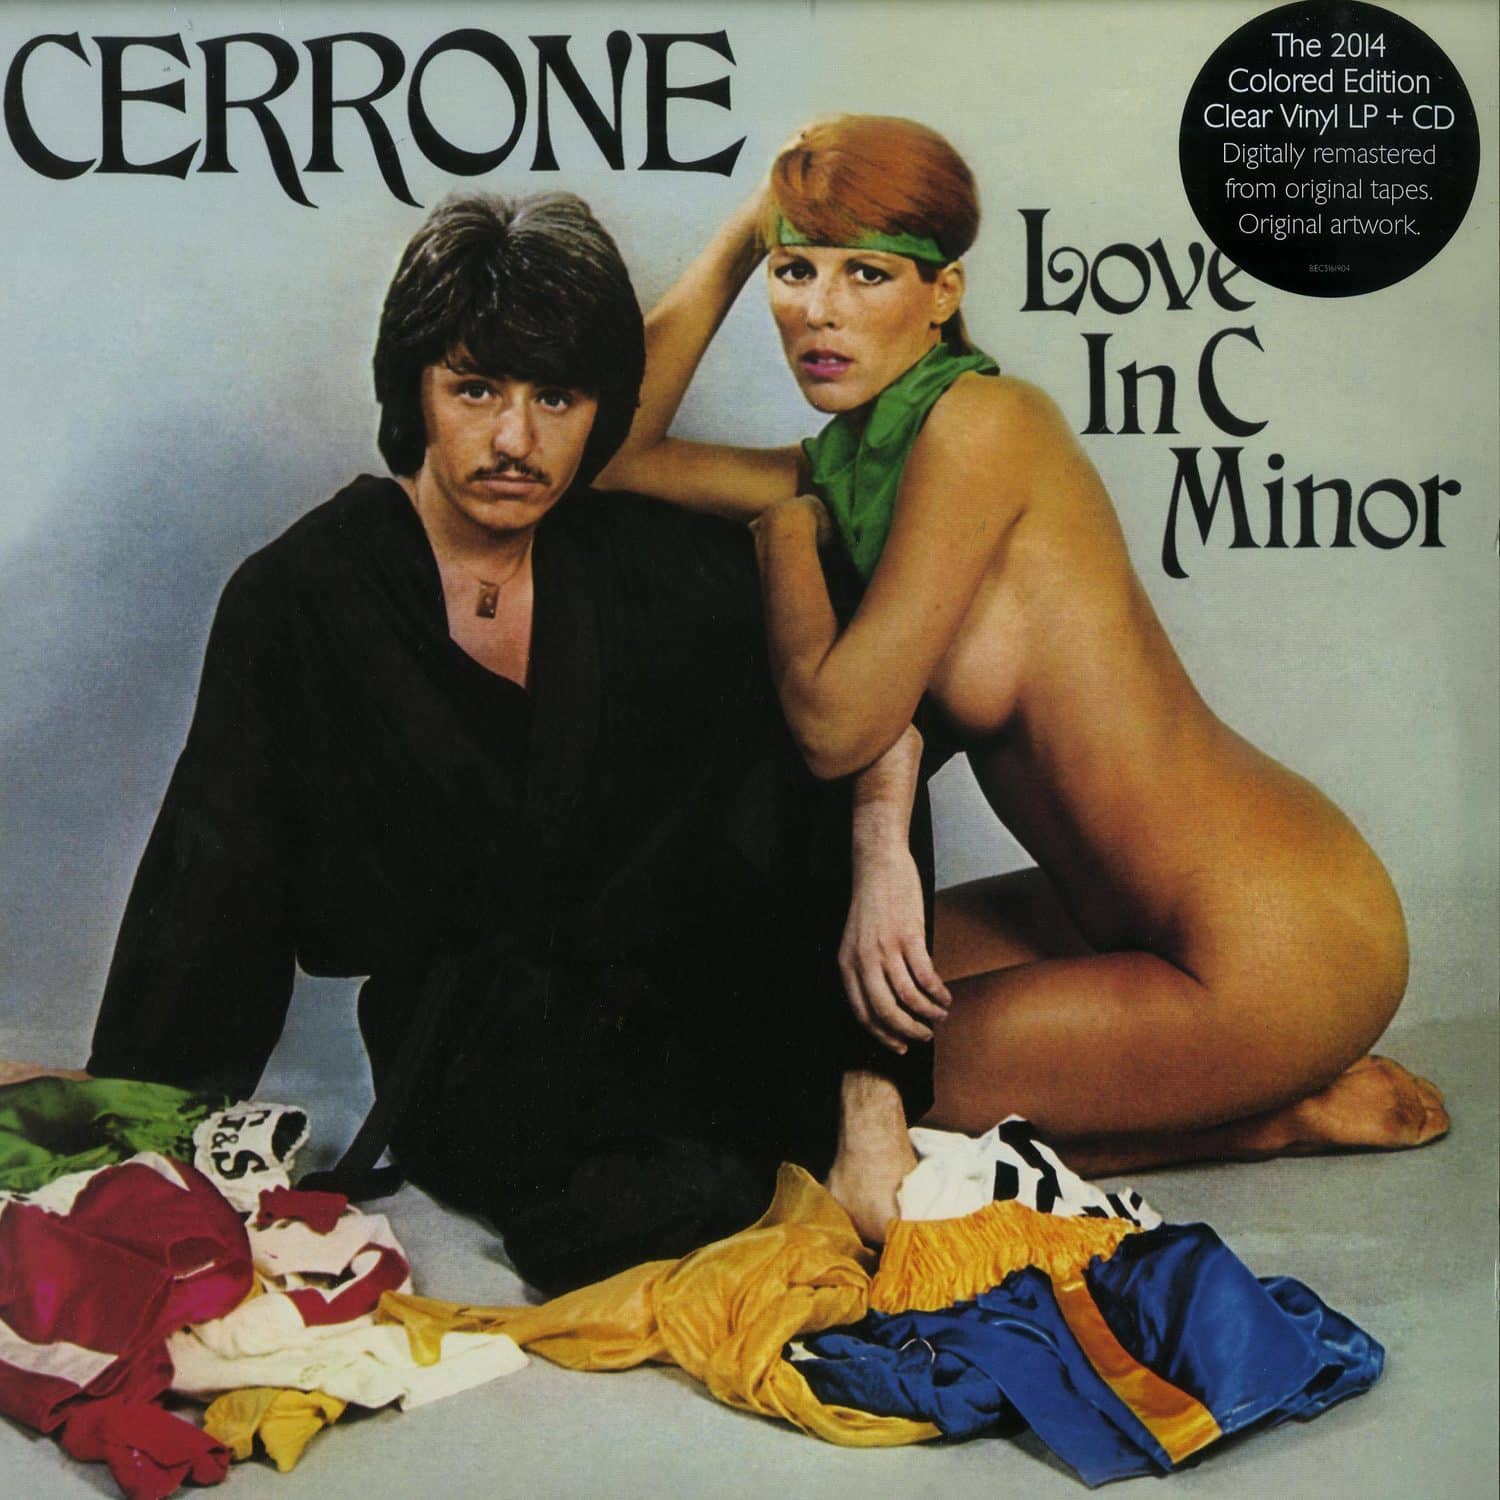 Cerrone - LOVE IN C MINOR 